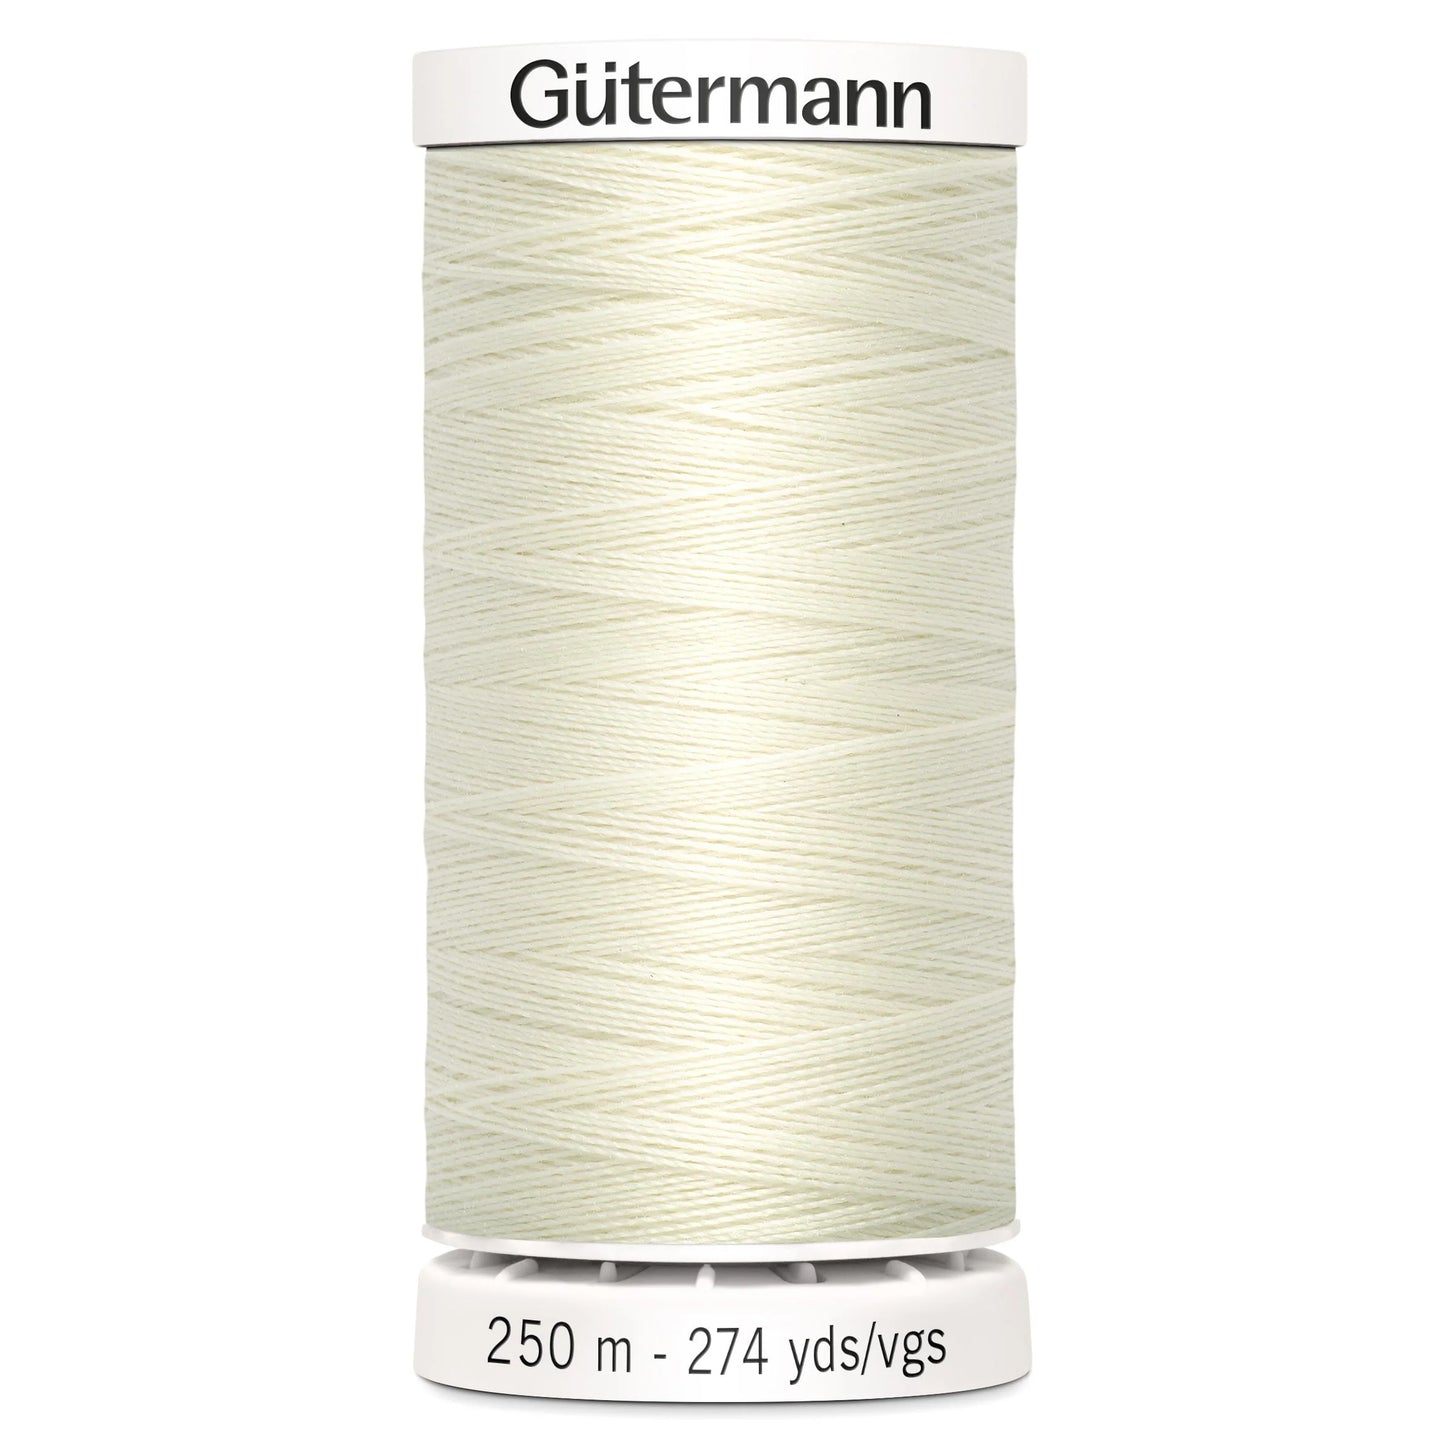 1 Gutermann Sew All 250m - Ivory